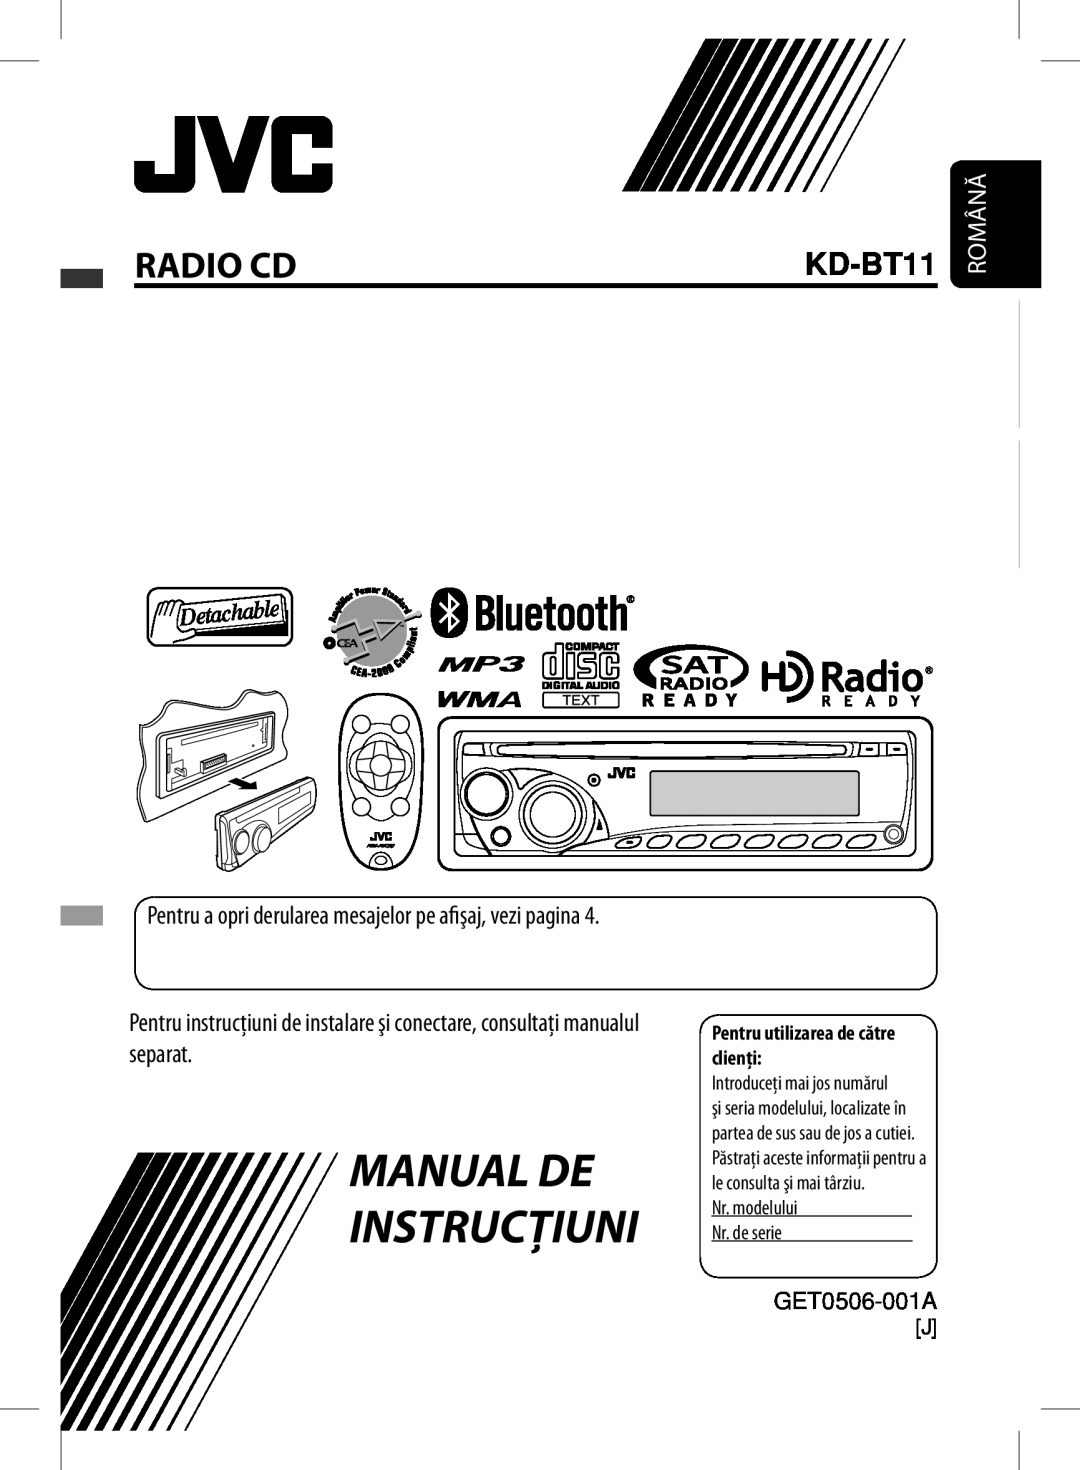 JVC KD-BT11 manual Français Español Română, Manualinstructionsde, Cdradioreceivercd Receptor Con Cd Récepteur Cd 